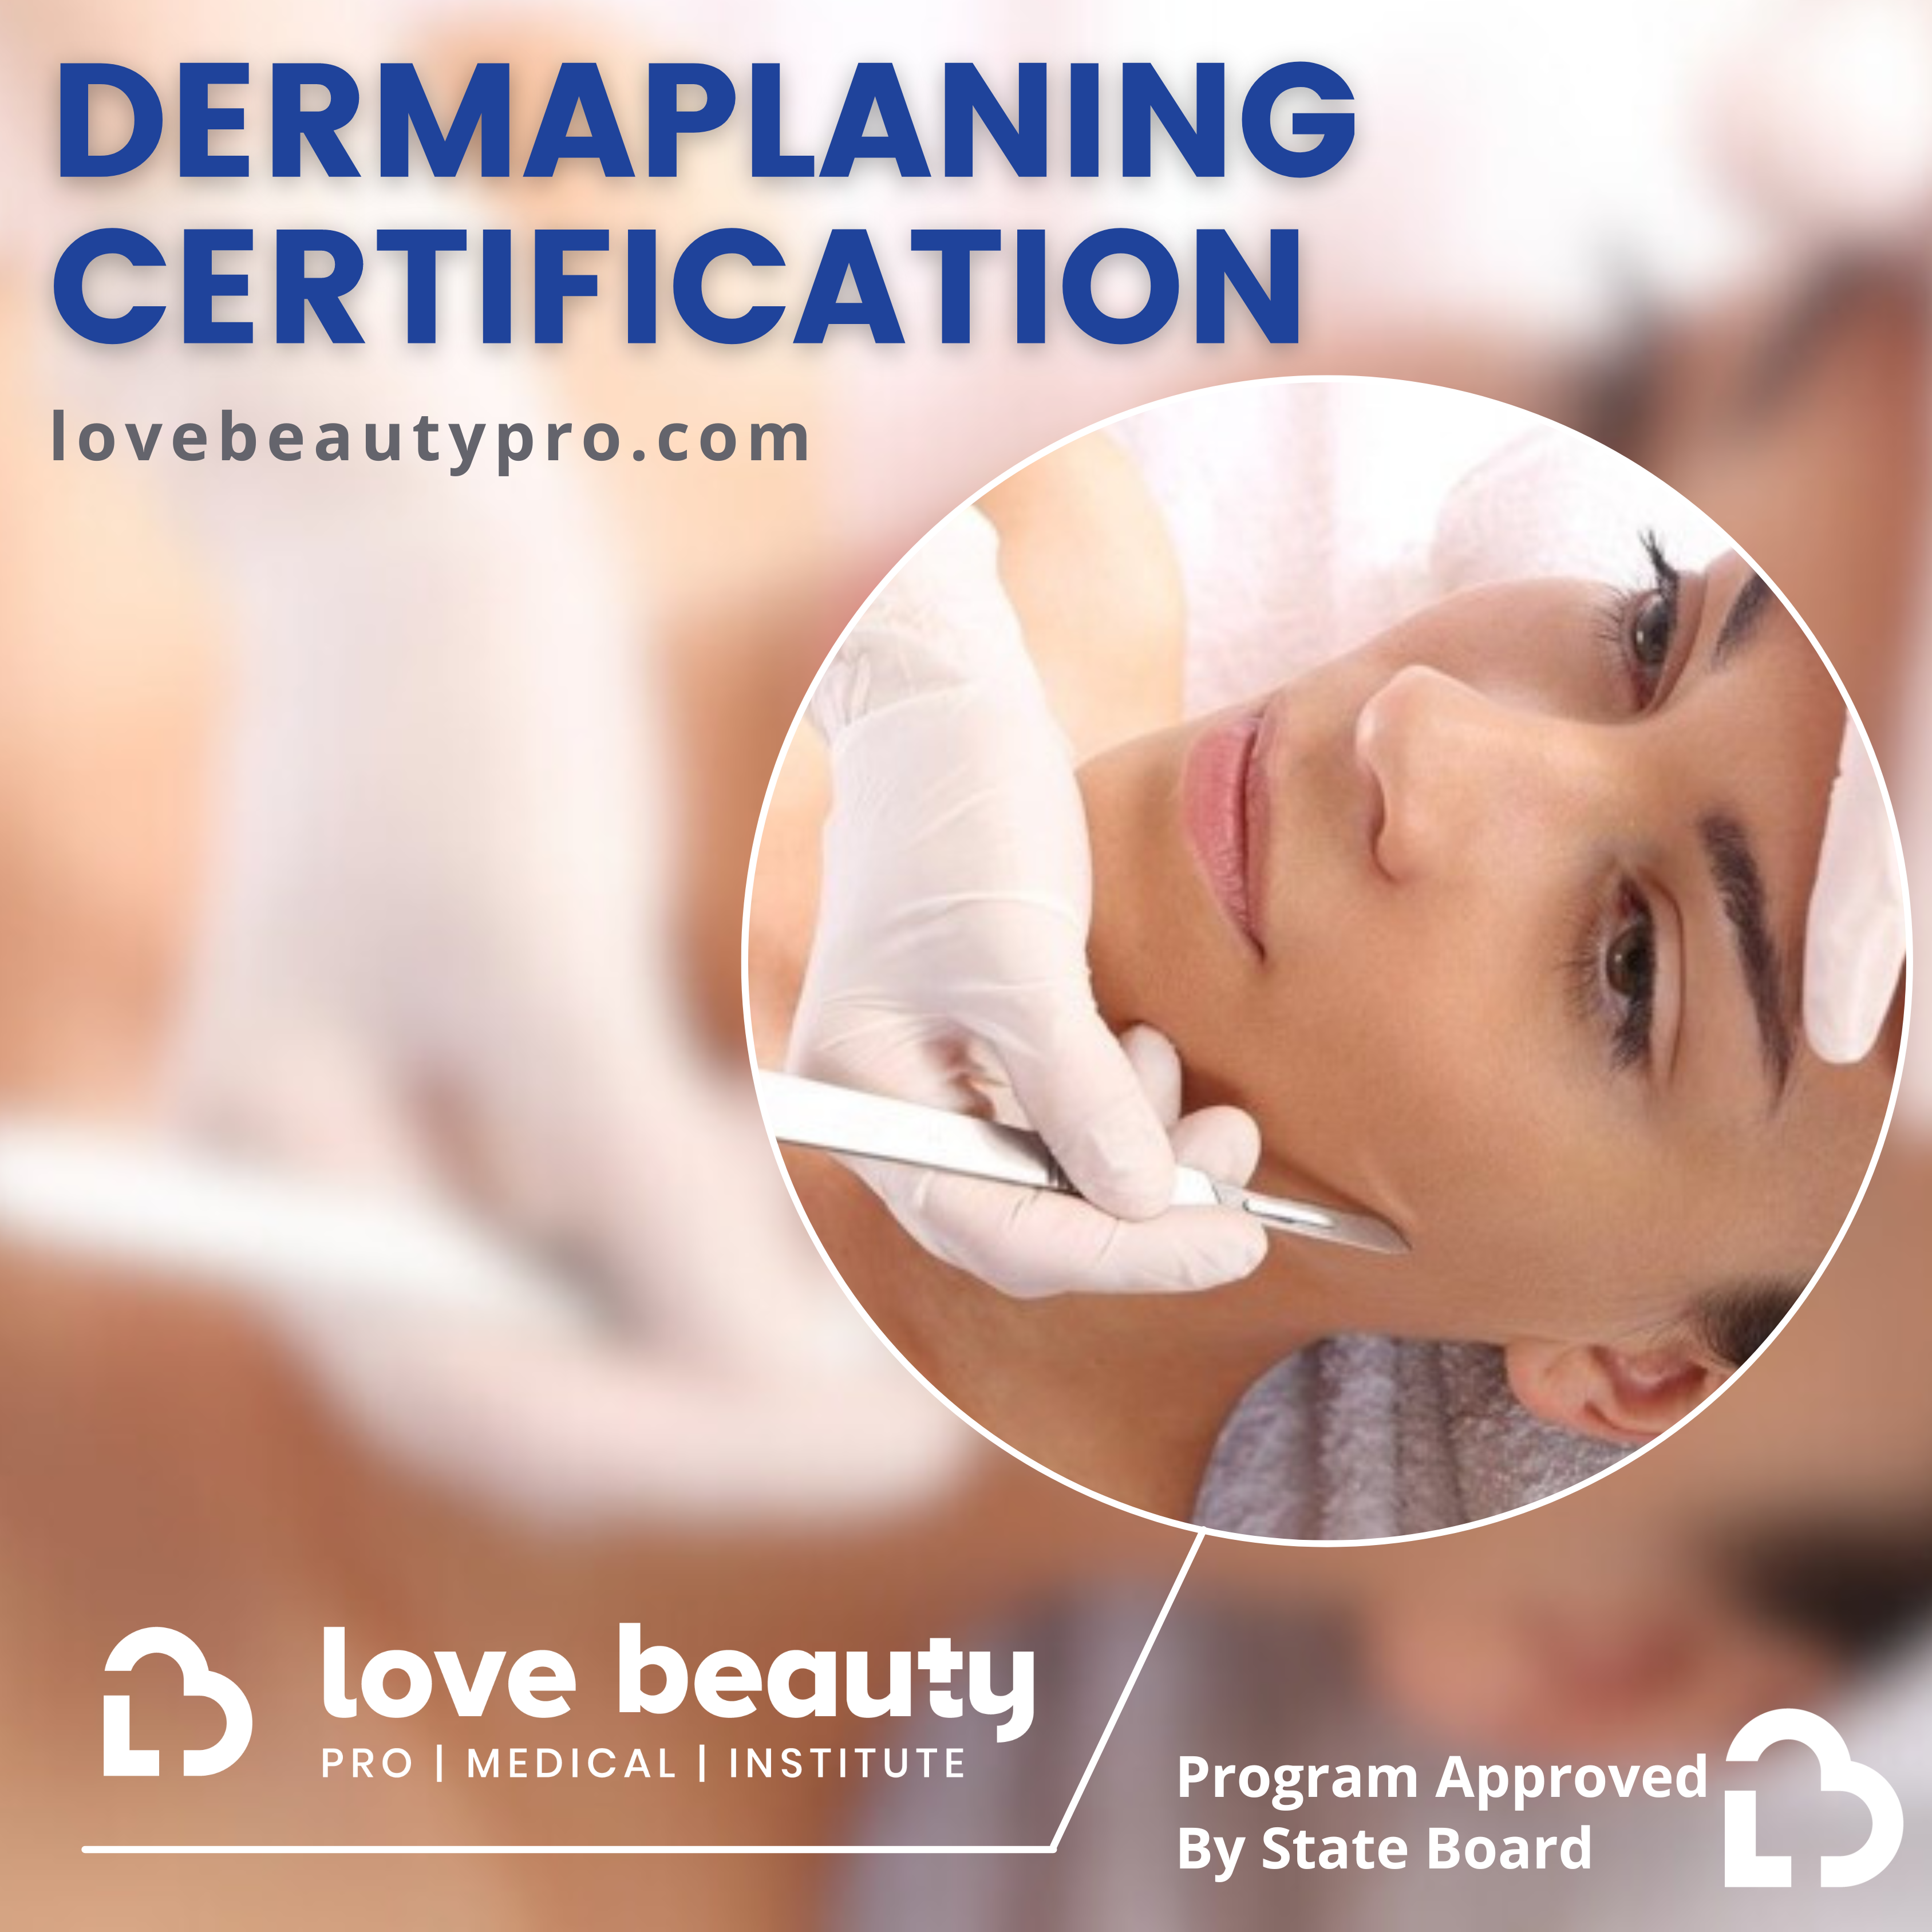 DERMAPLANING Certification - lovebeautypro.com